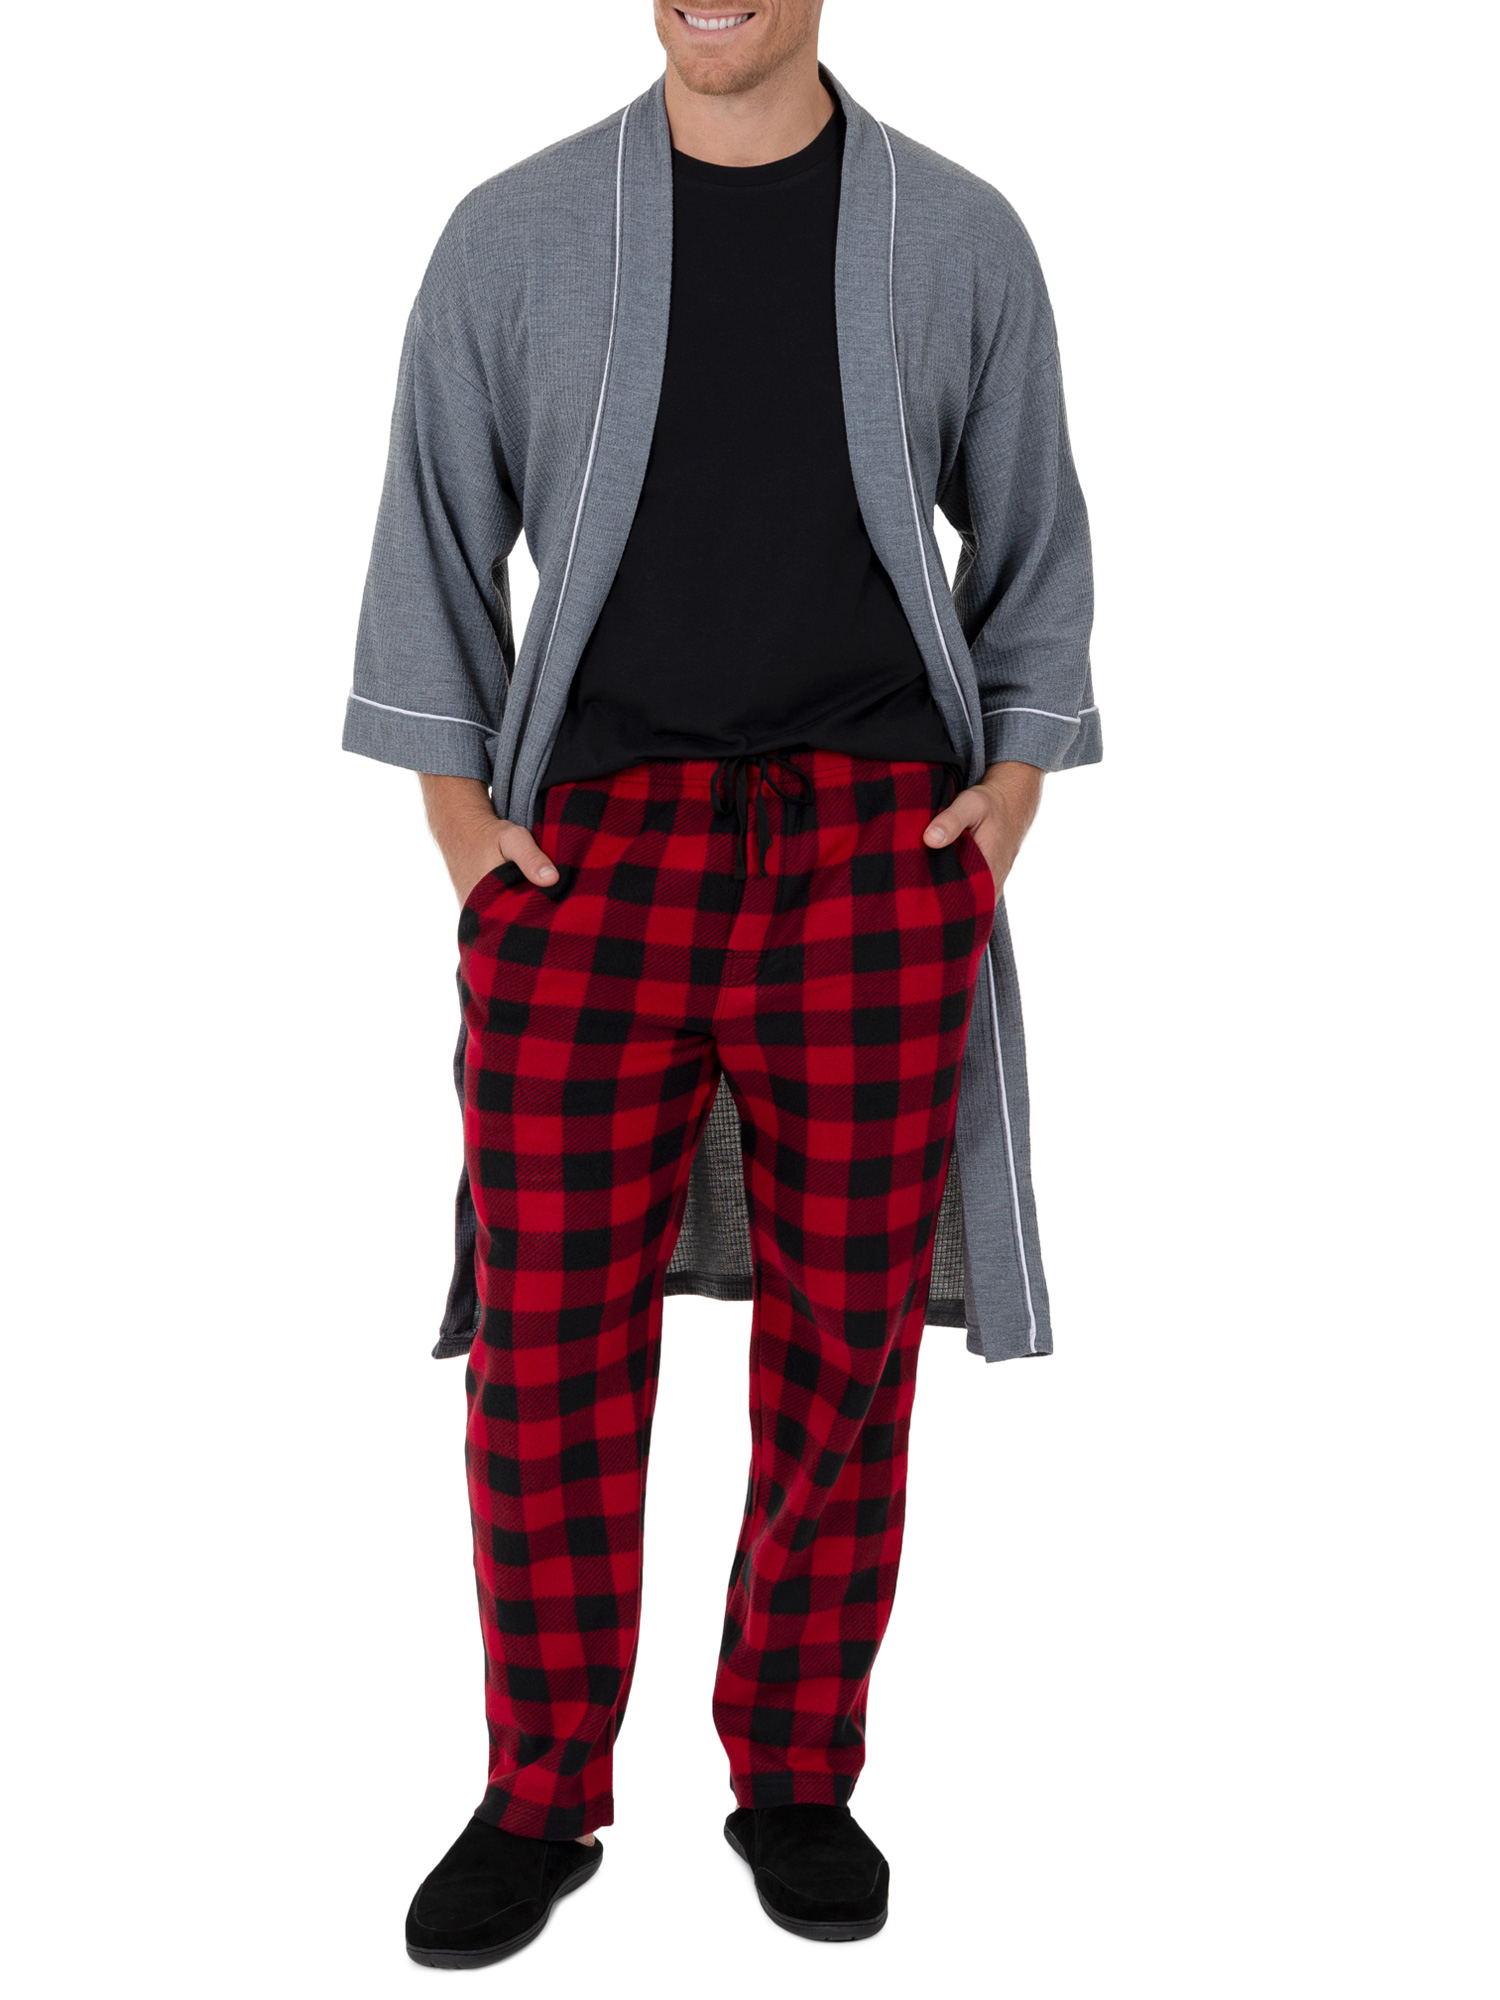 Fruit Of The Loom Men’s Short Sleeve Crewneck Top and Fleece Pajama Pants Set - image 2 of 5